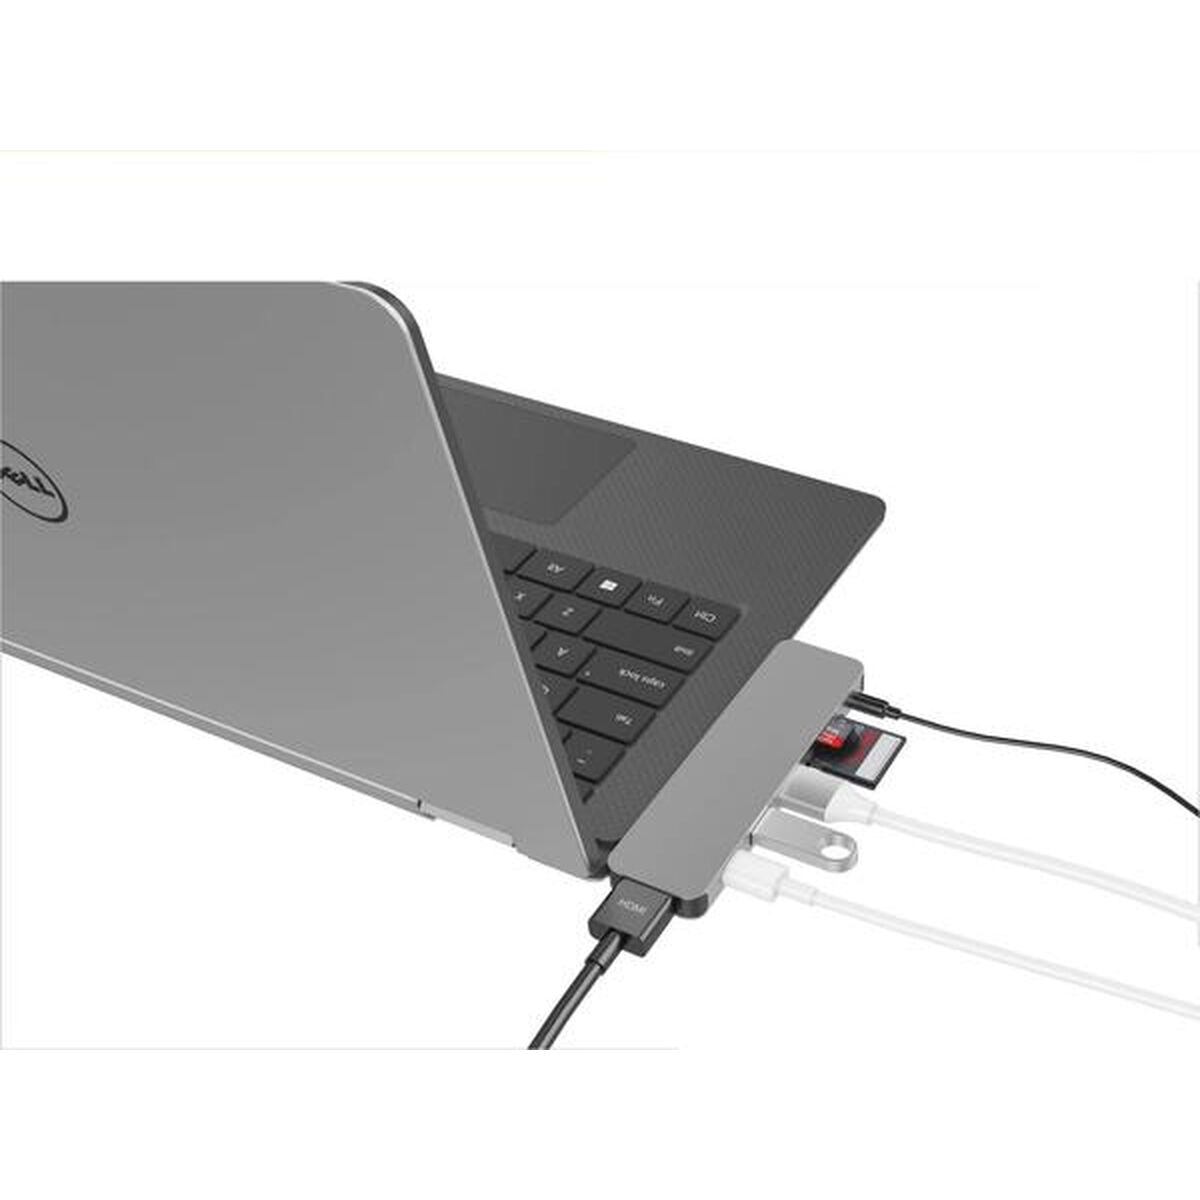 USB Hub Targus GN21D-SILVER Grey